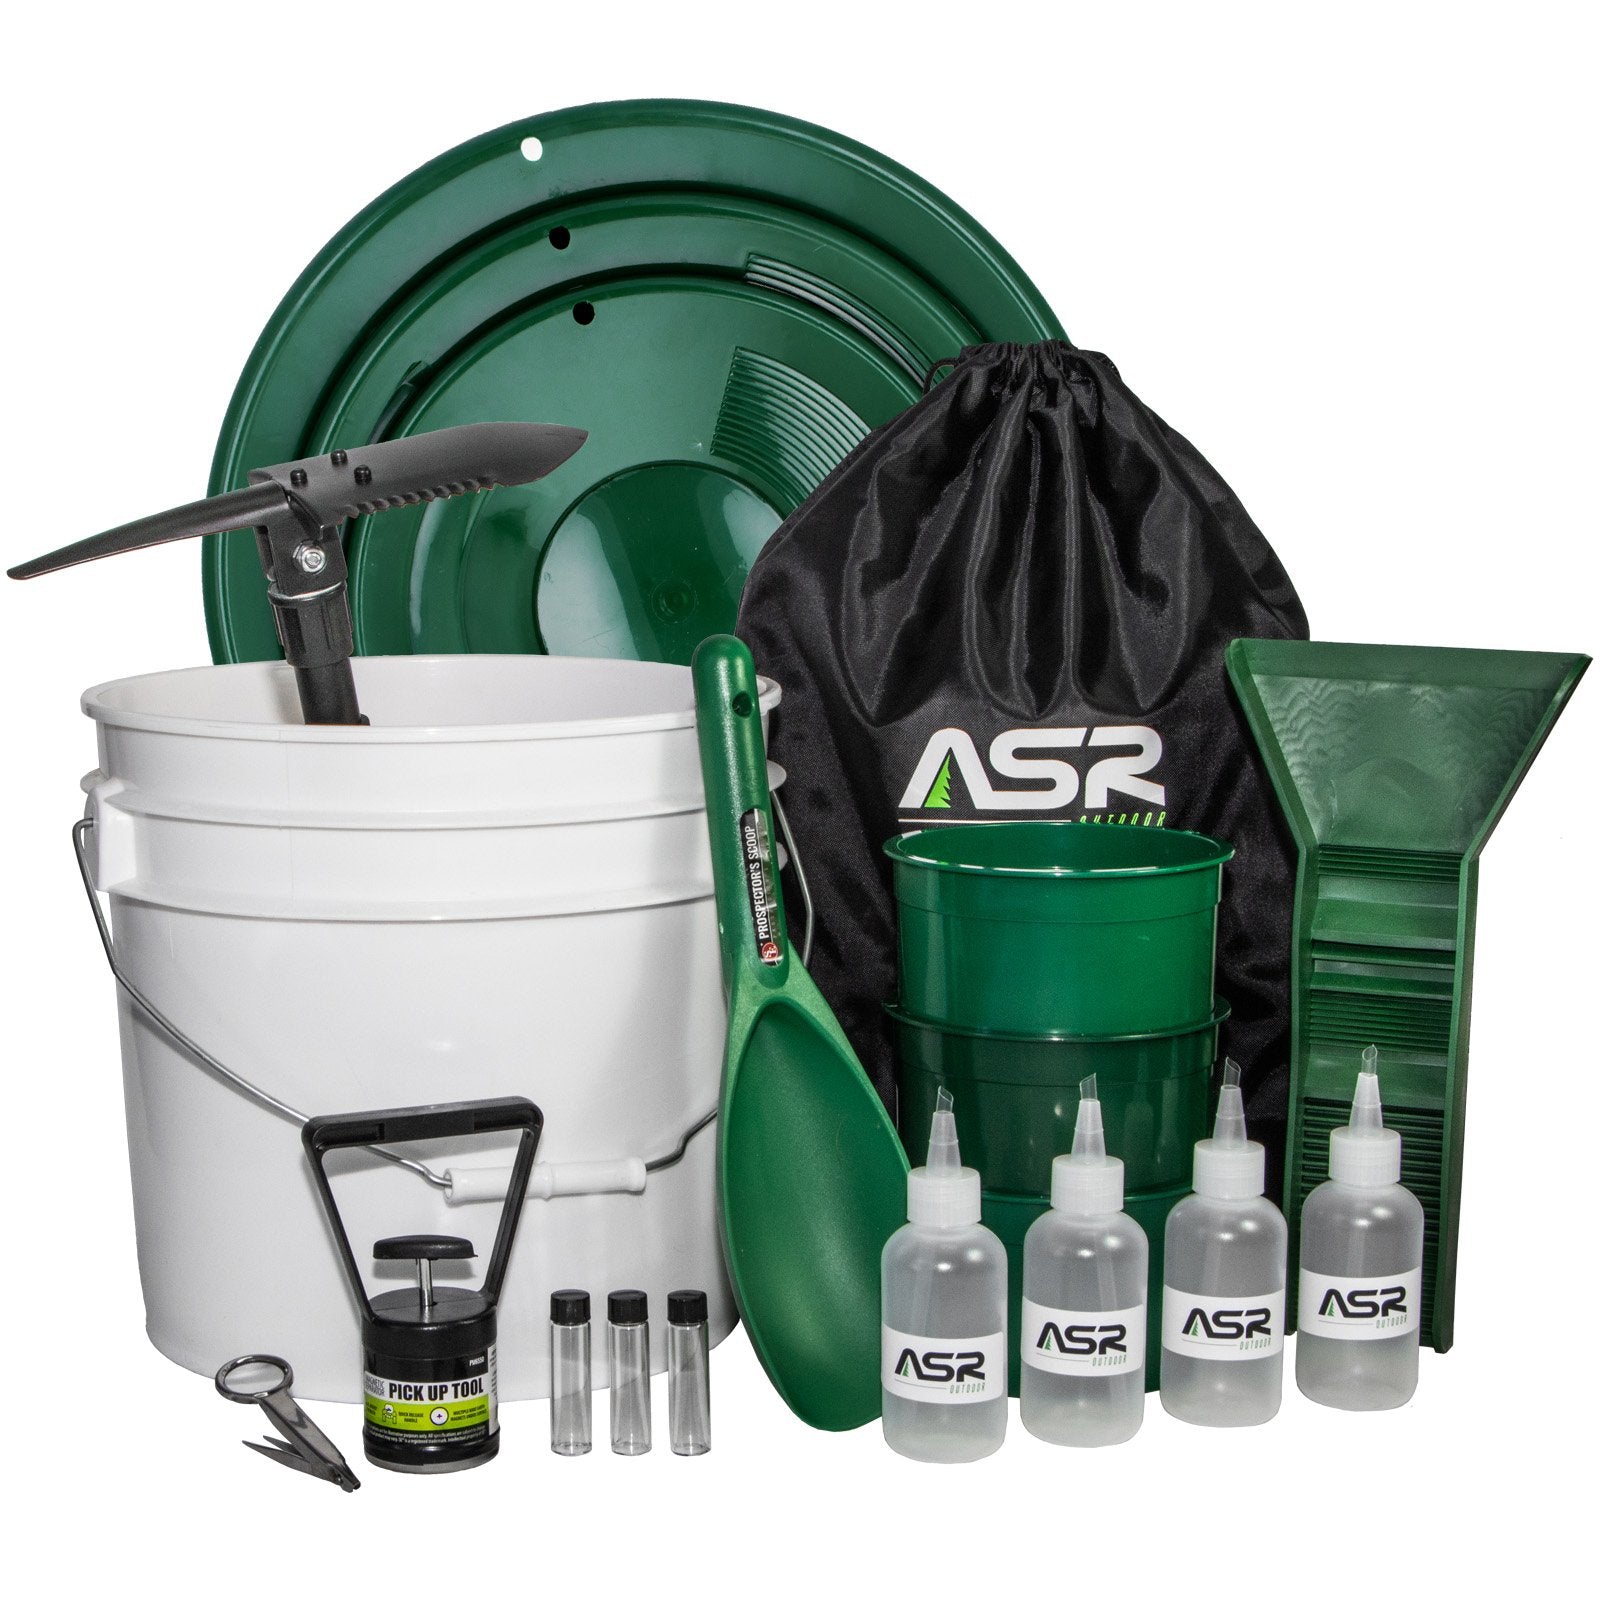 ASR Outdoor Gold Panning Kit Beginner Prospecting Equipment and